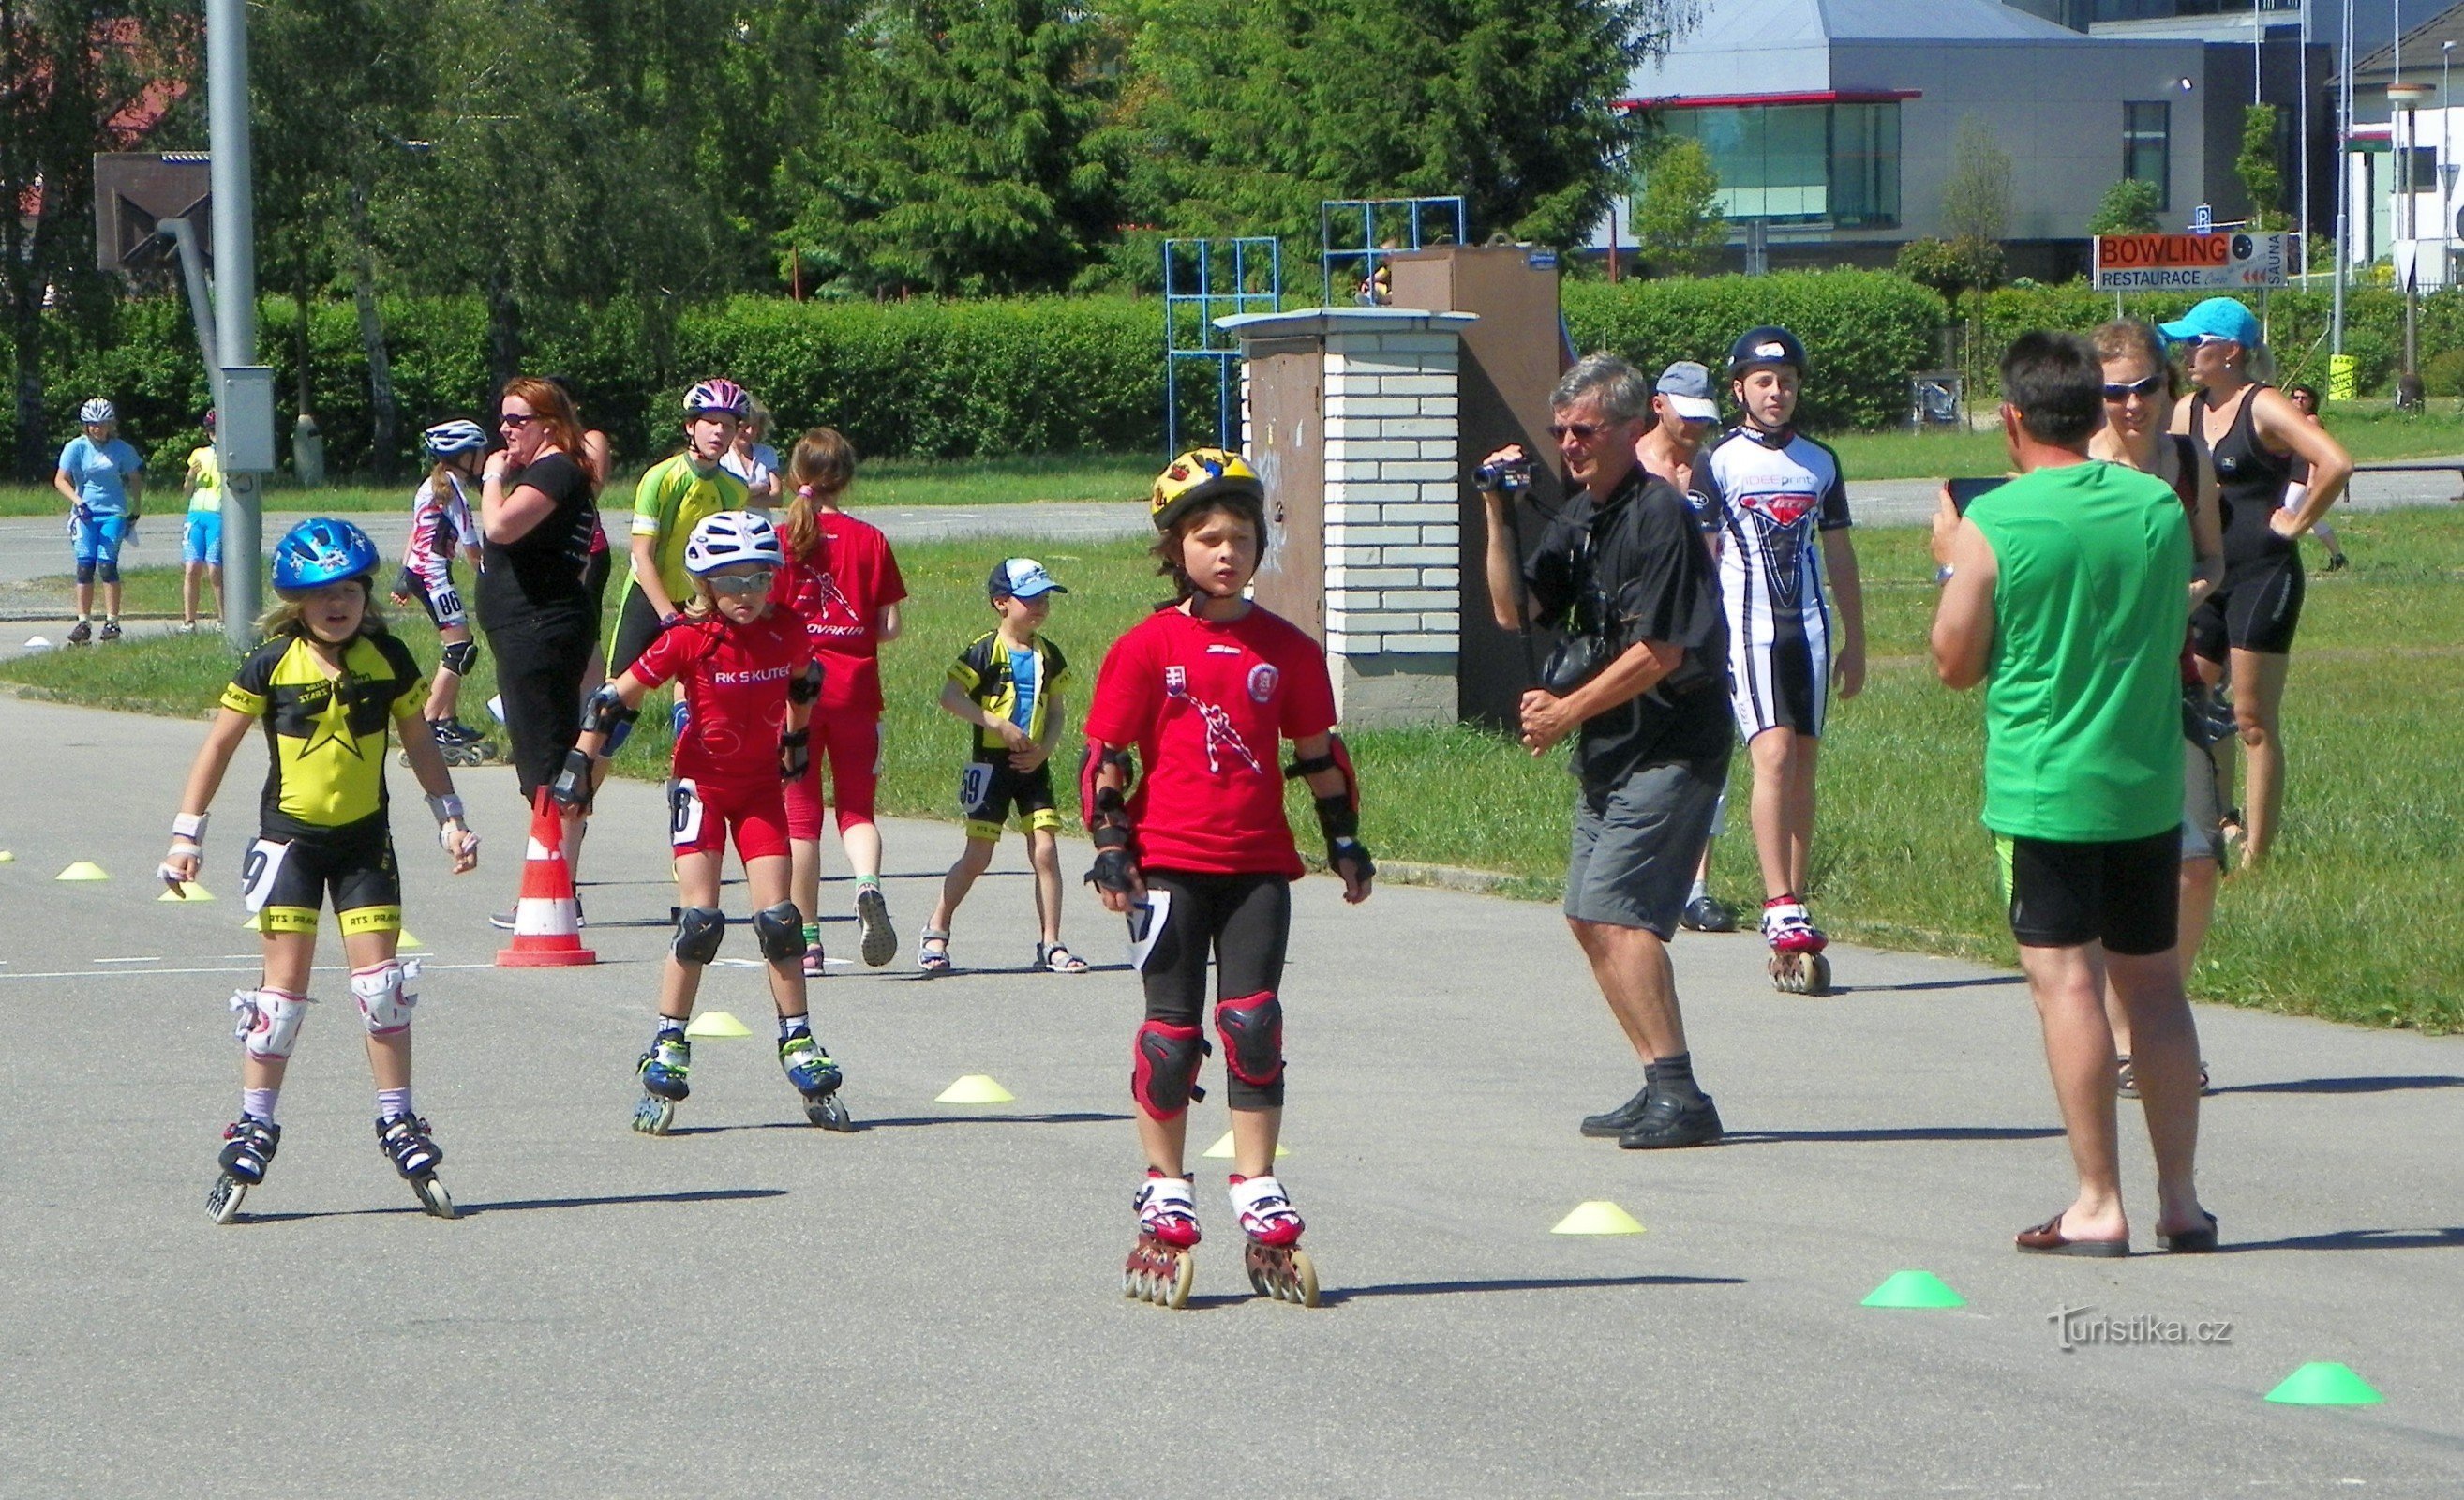 MČR in schaatsen op inline skates 7.6.2014/XNUMX/XNUMX